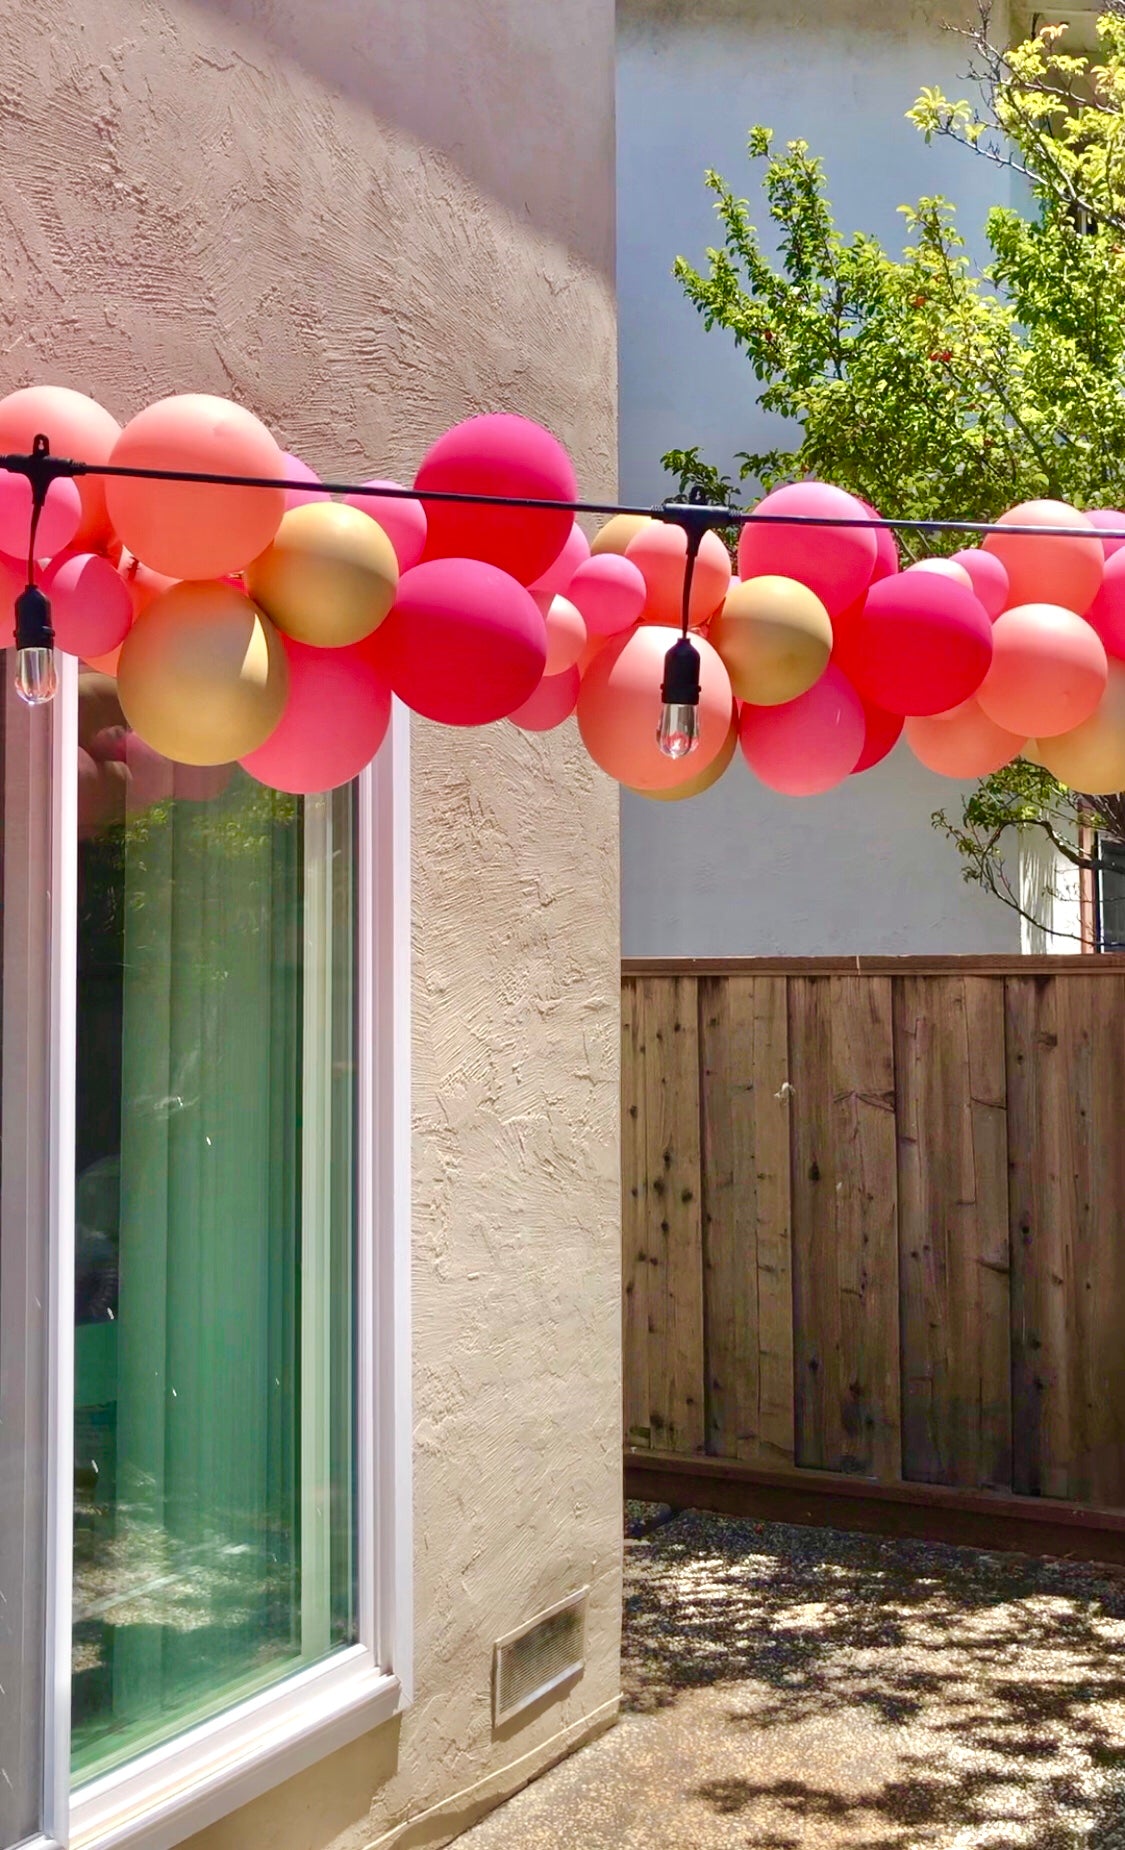 Balloon Garland for Backyard Birthday Decorations - Outdoor Movie Night - Backyard Movie Night Decorations - Pretty Collected